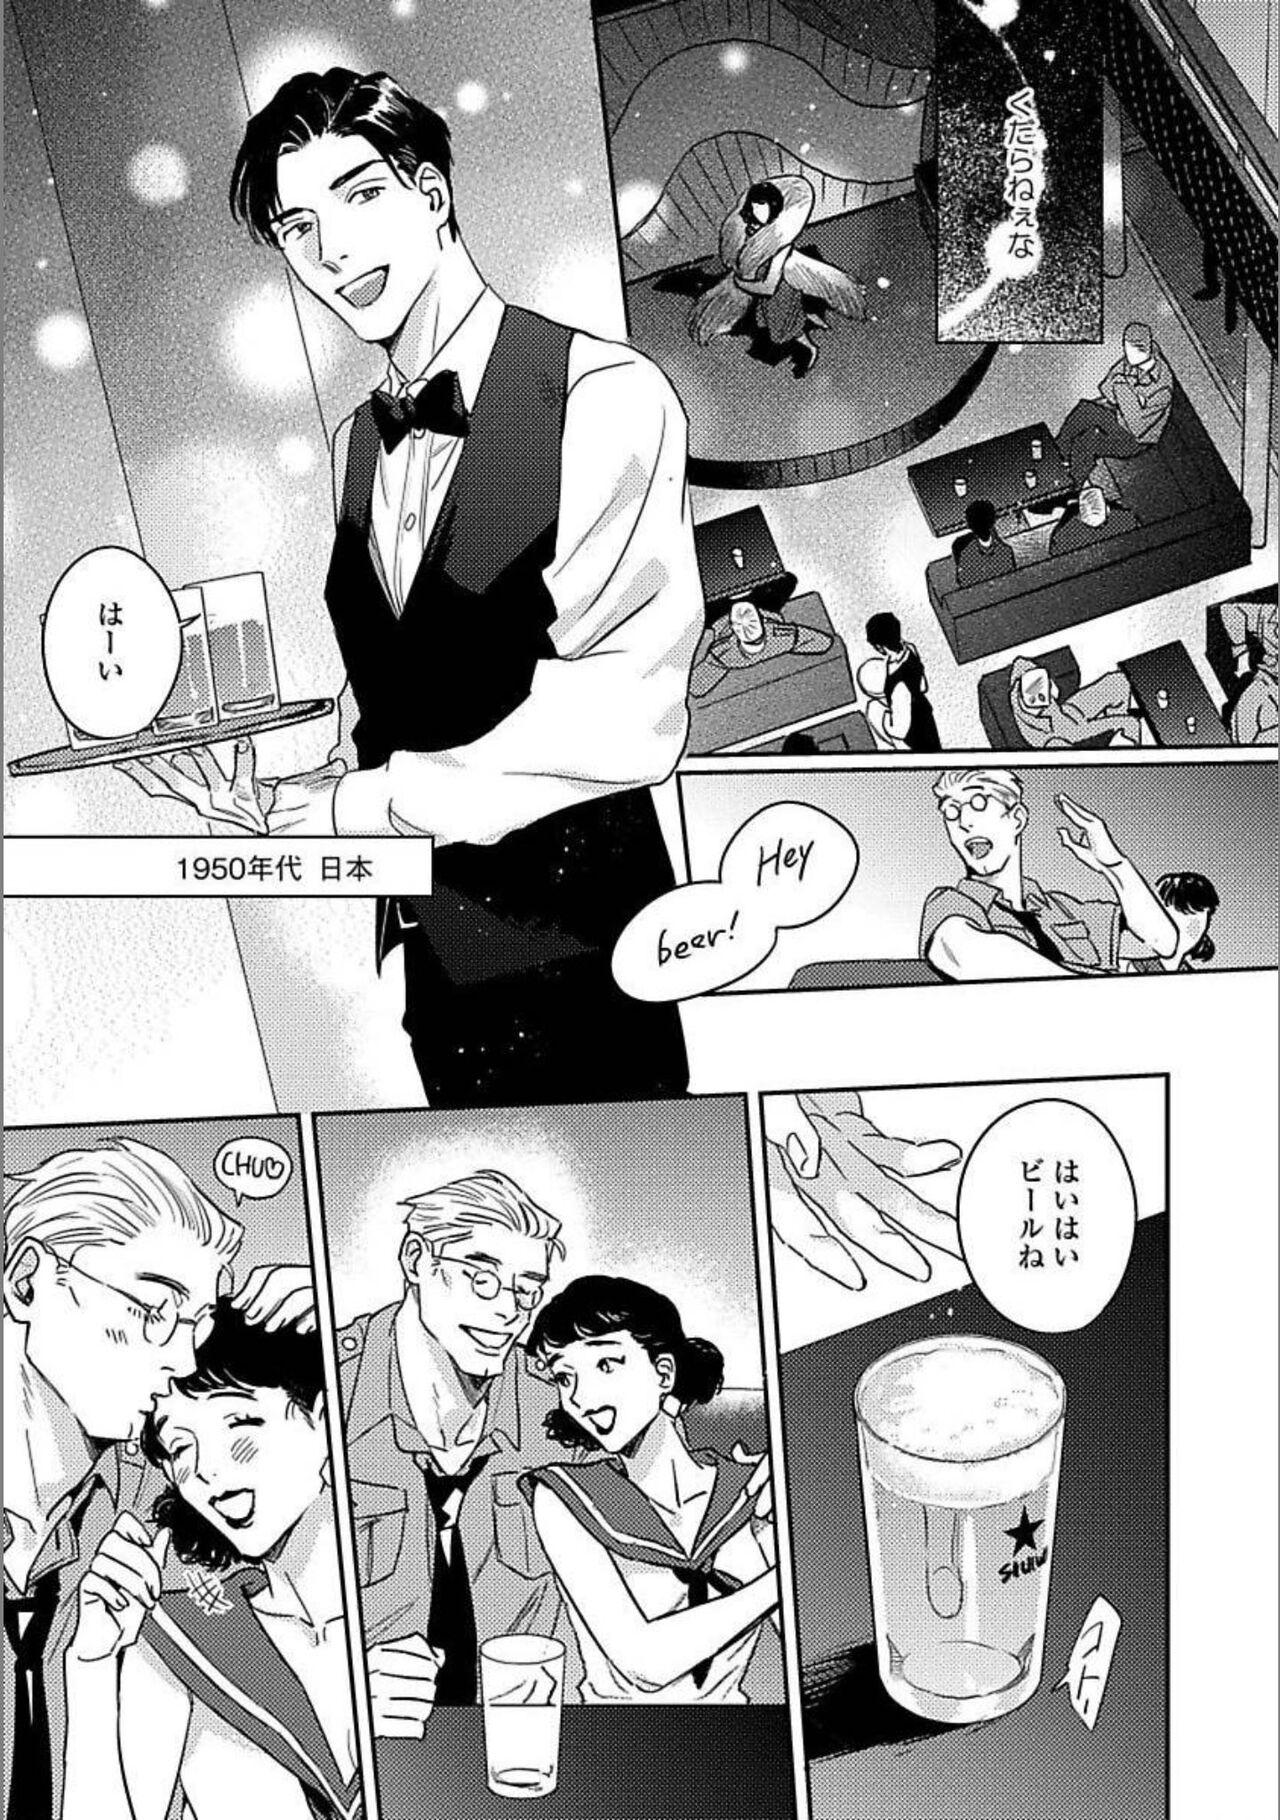 Best Blowjob Hitori de Yoru wa Koerarenai - I Can't Stand Another Night Alone Closeups - Page 6